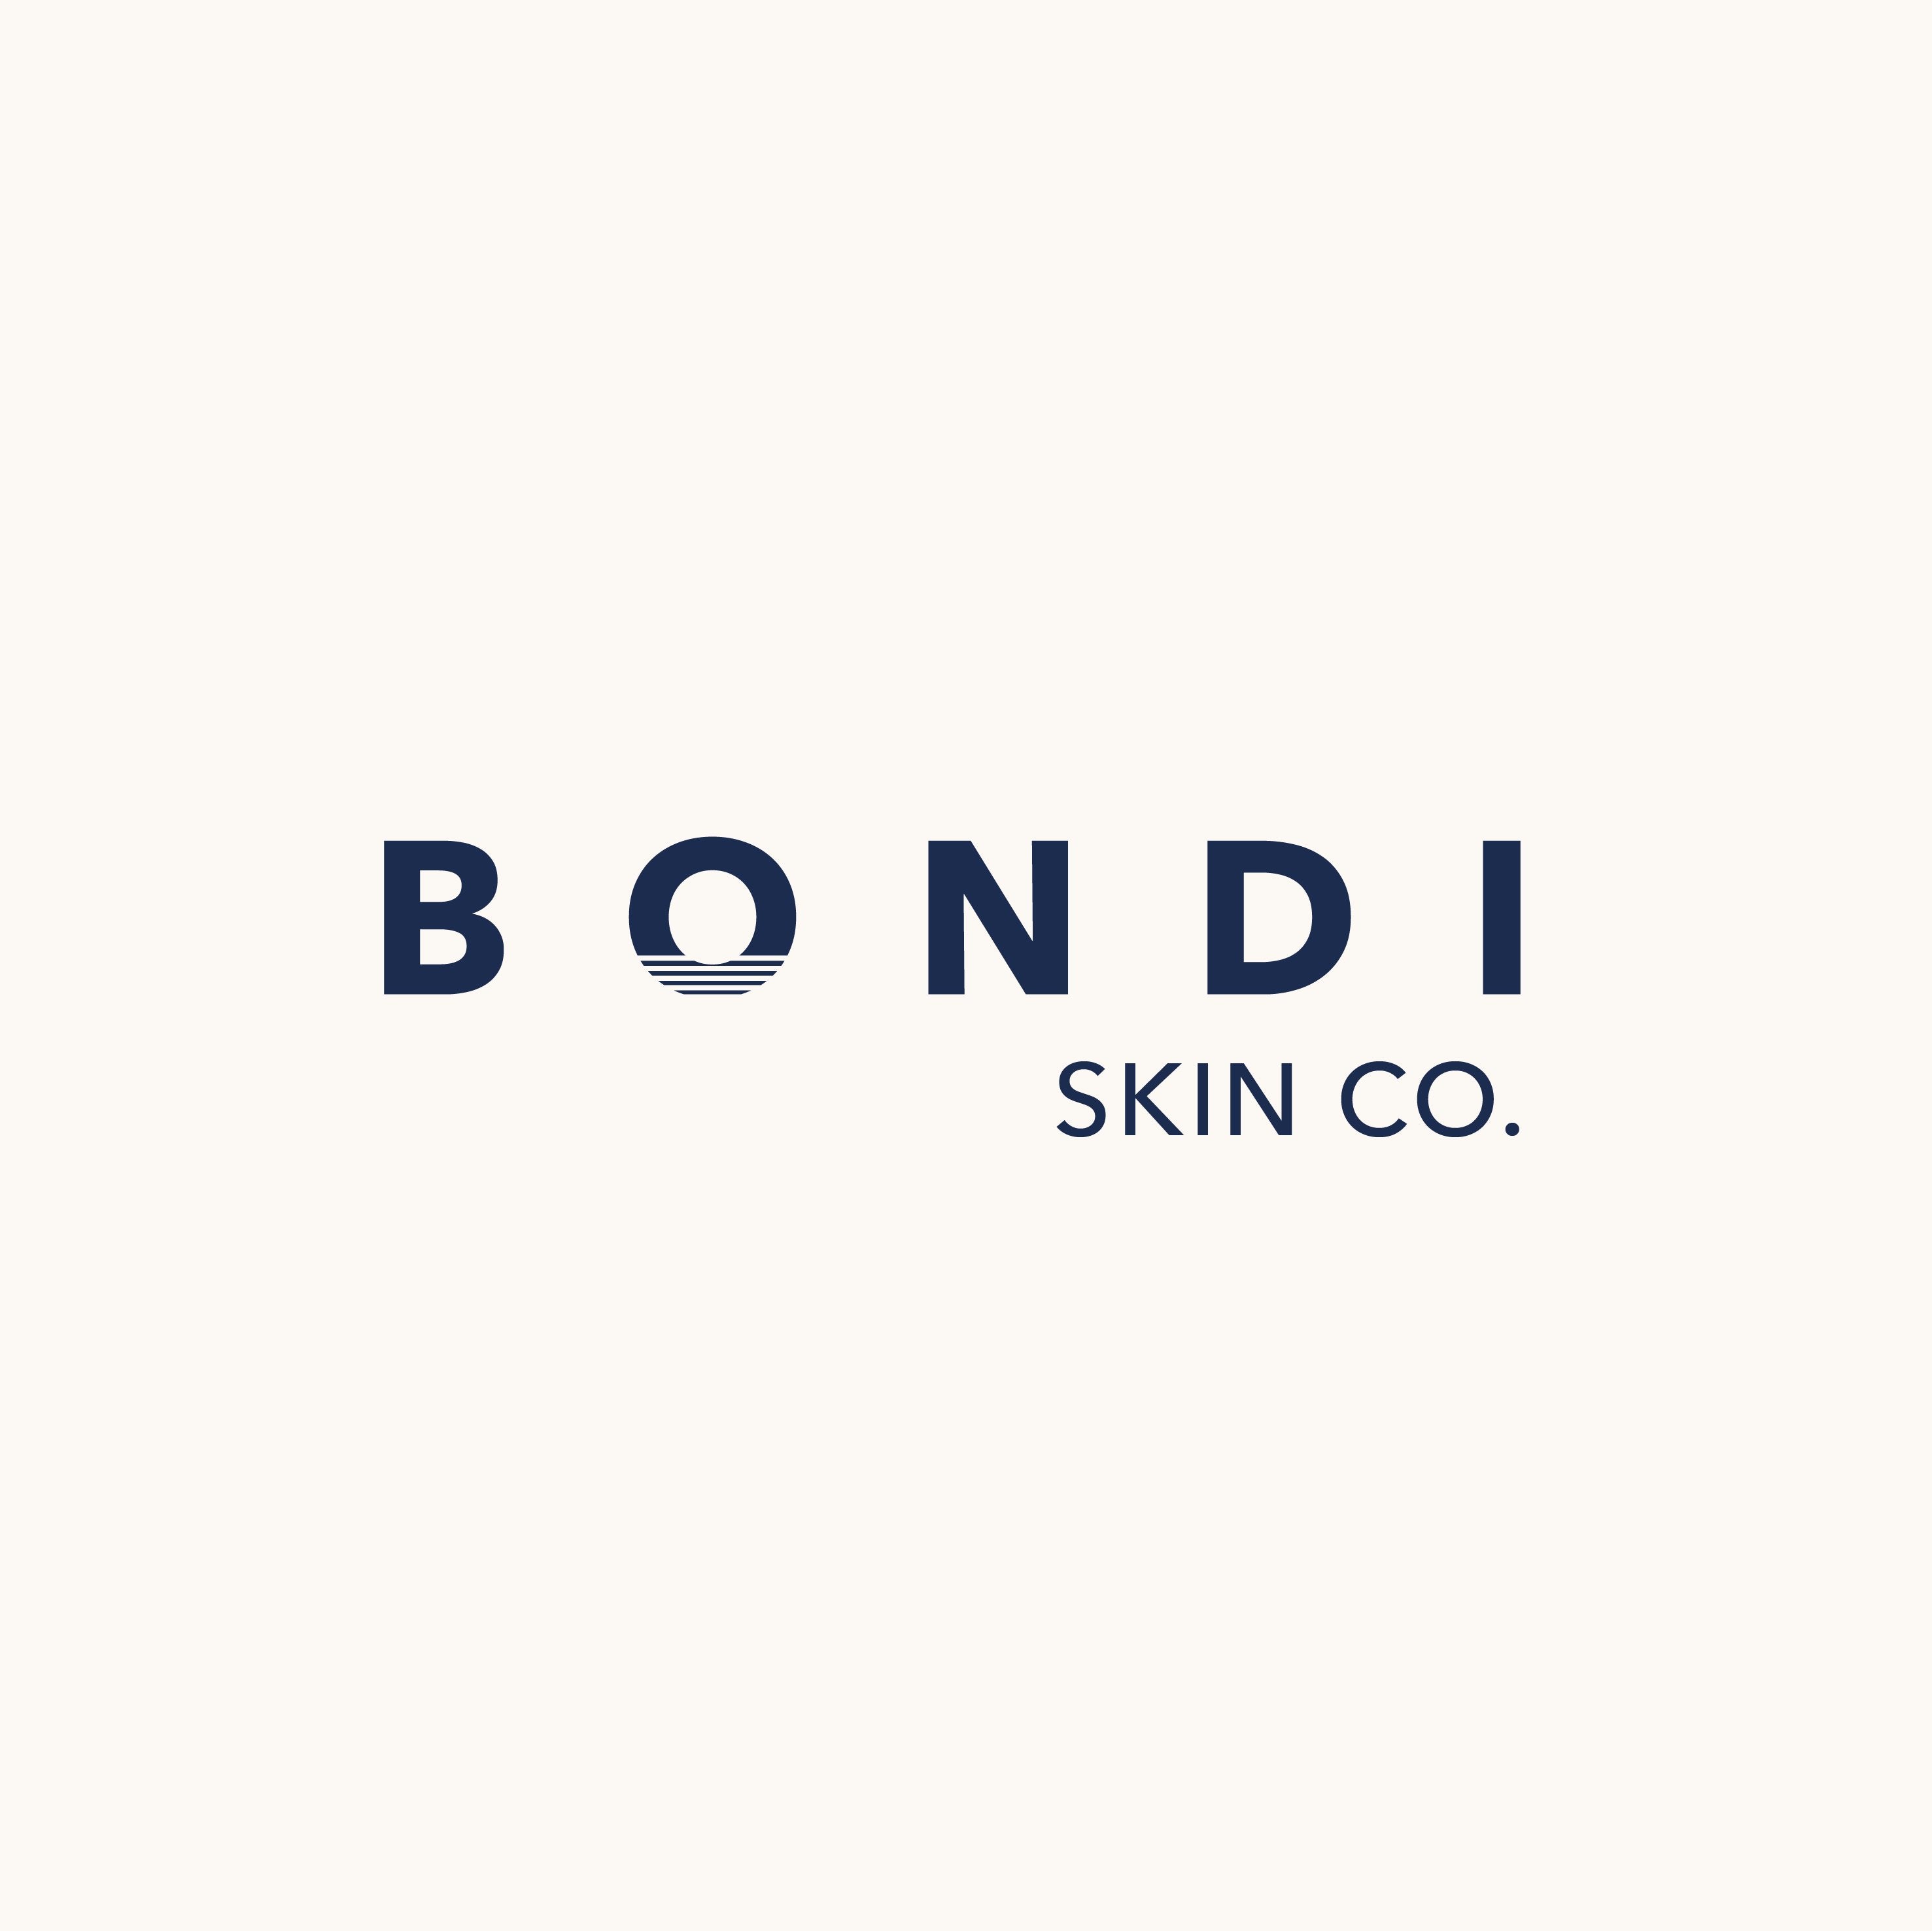 Bondi Skin Co.